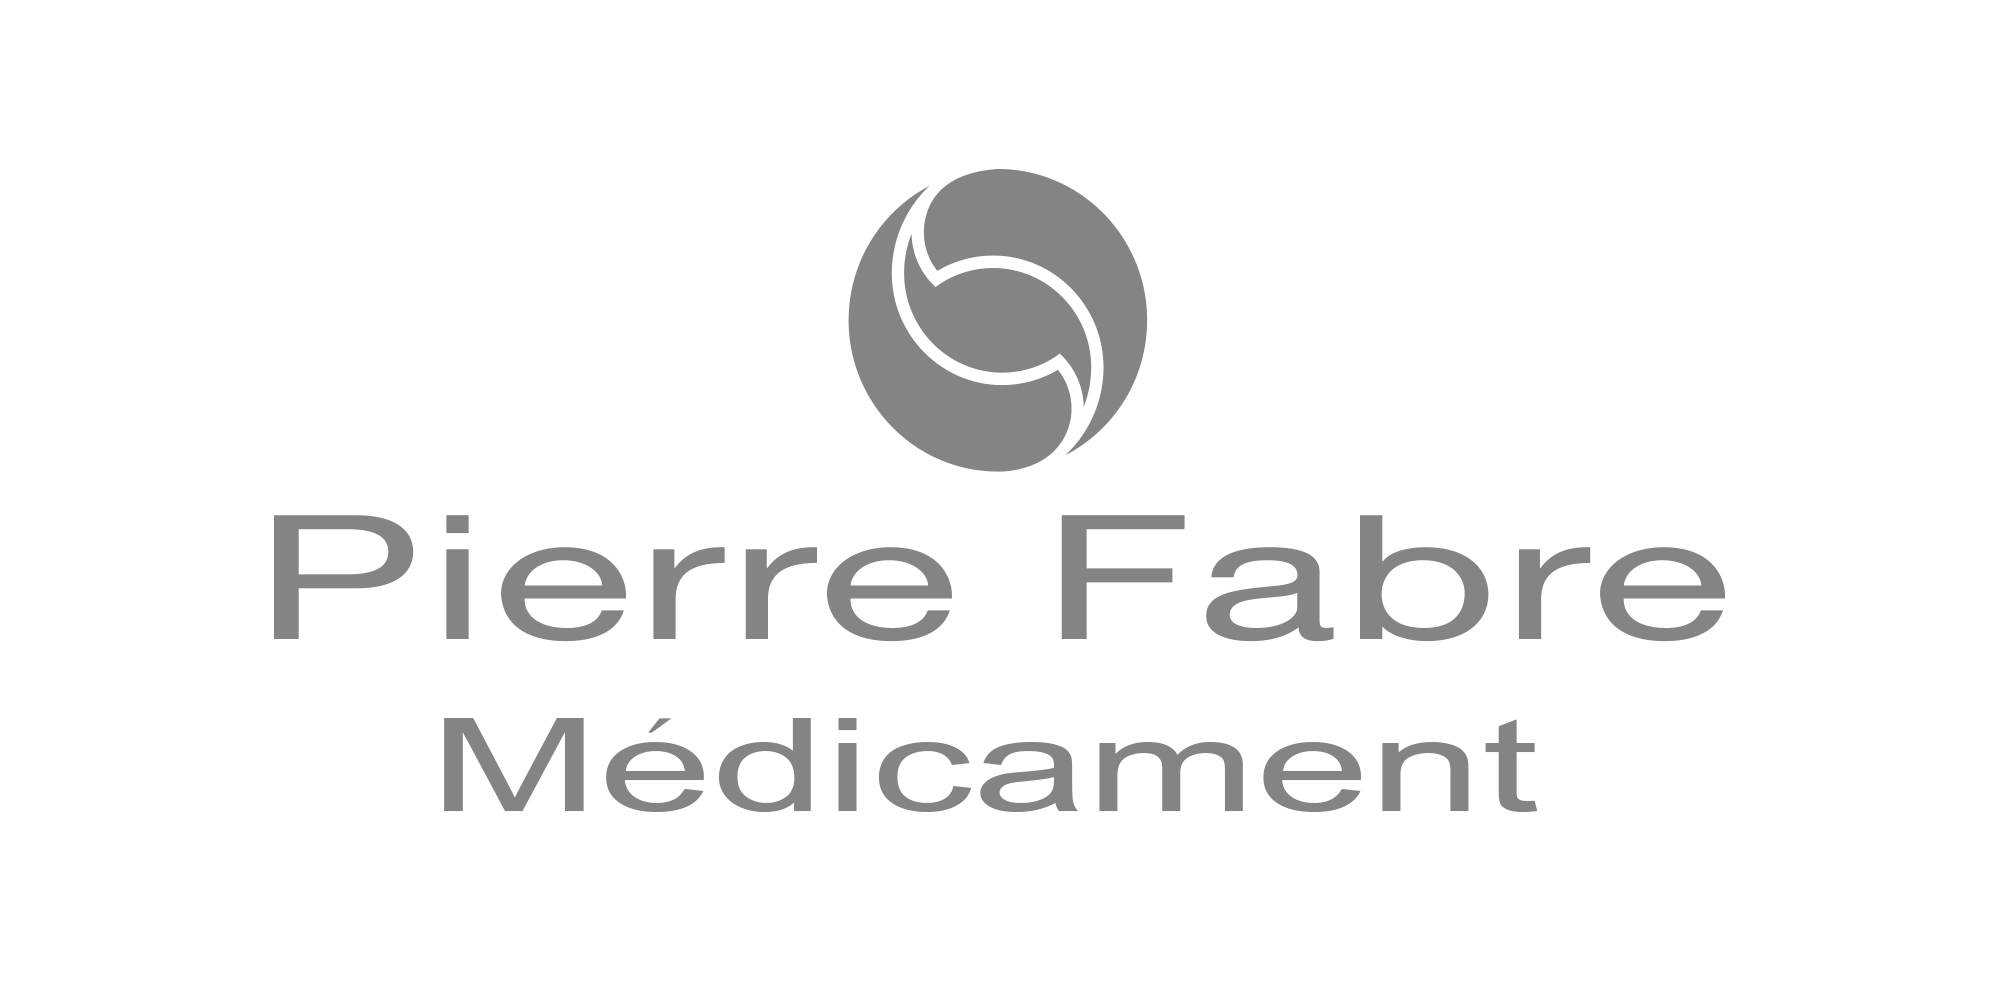 Pierre-Fabre logo